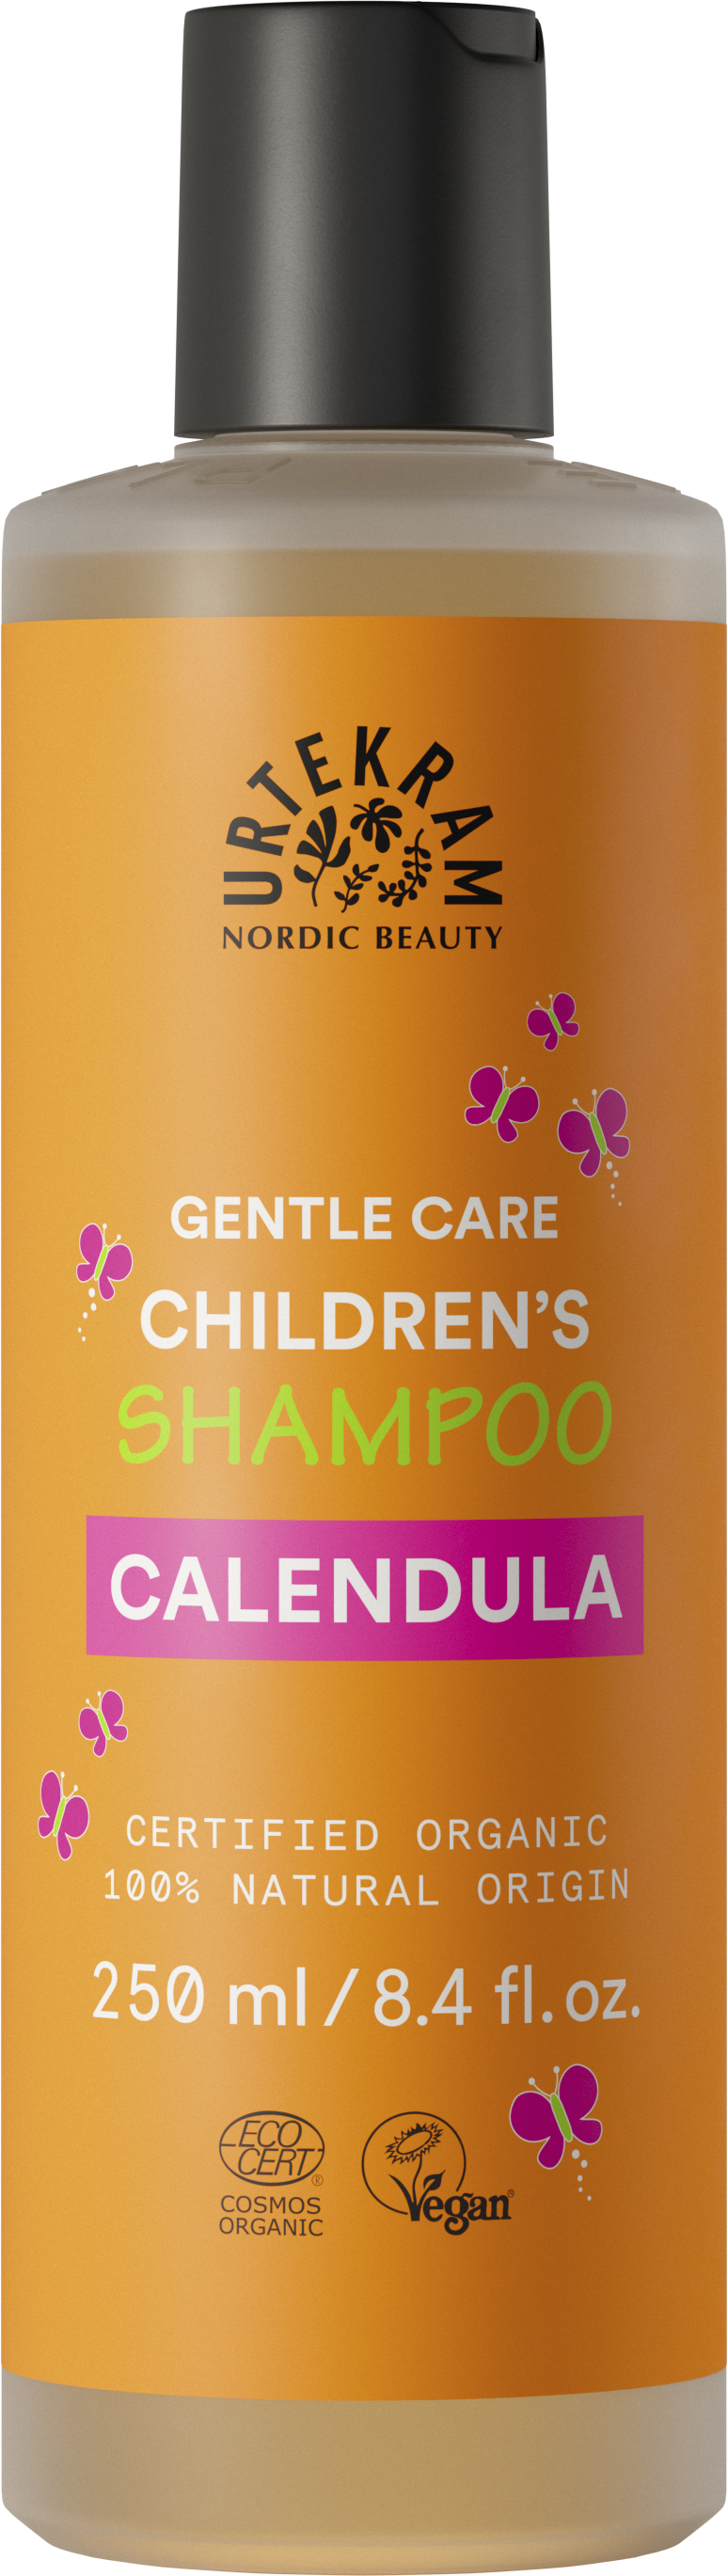 Calendula Children’s Shampoo 250 ml - Urtekram